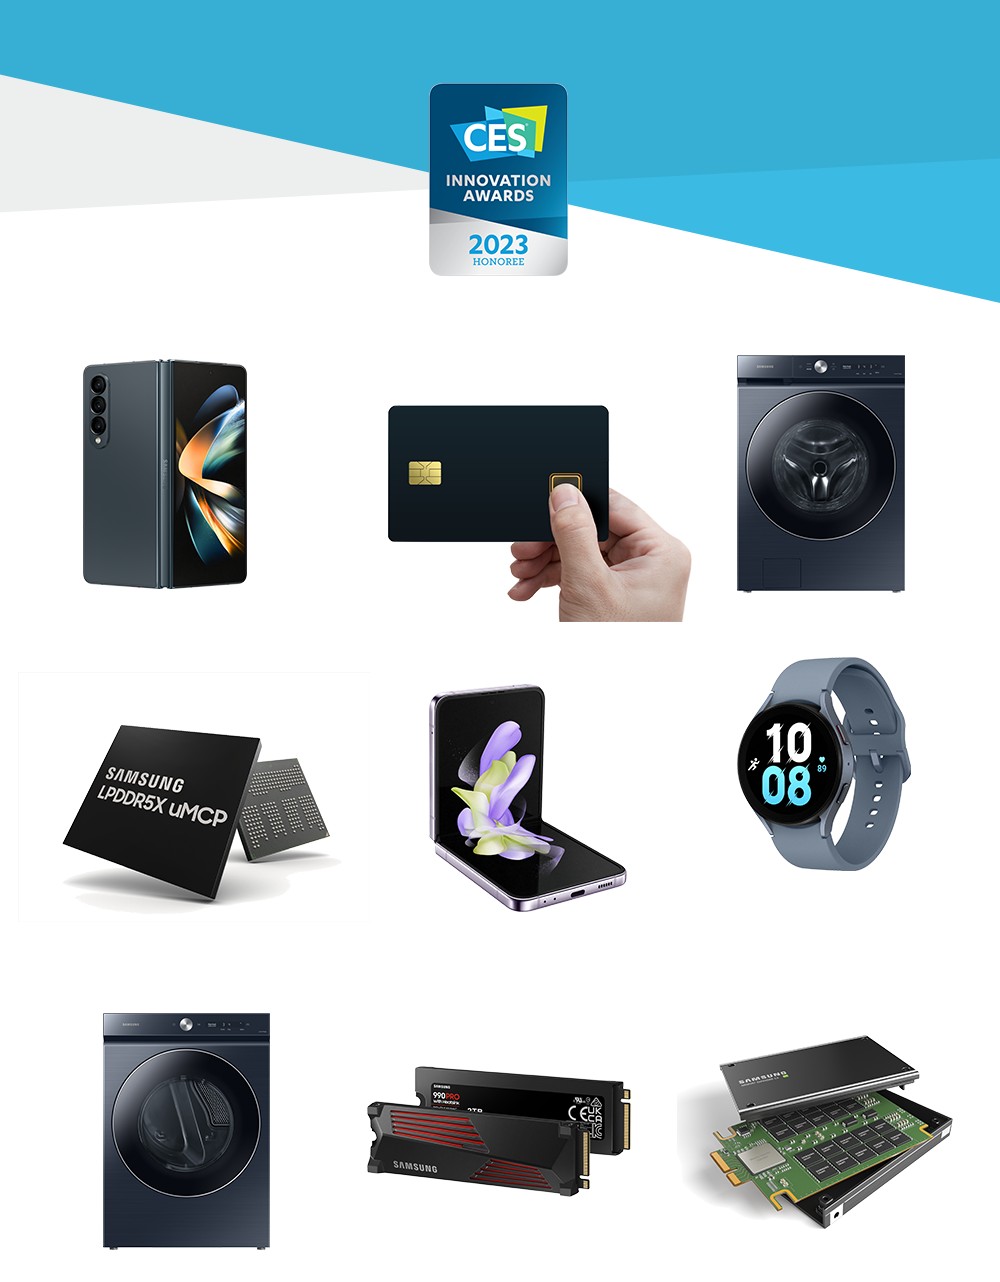 Samsung е добитник на 46 Награди за иновации на CES 2023